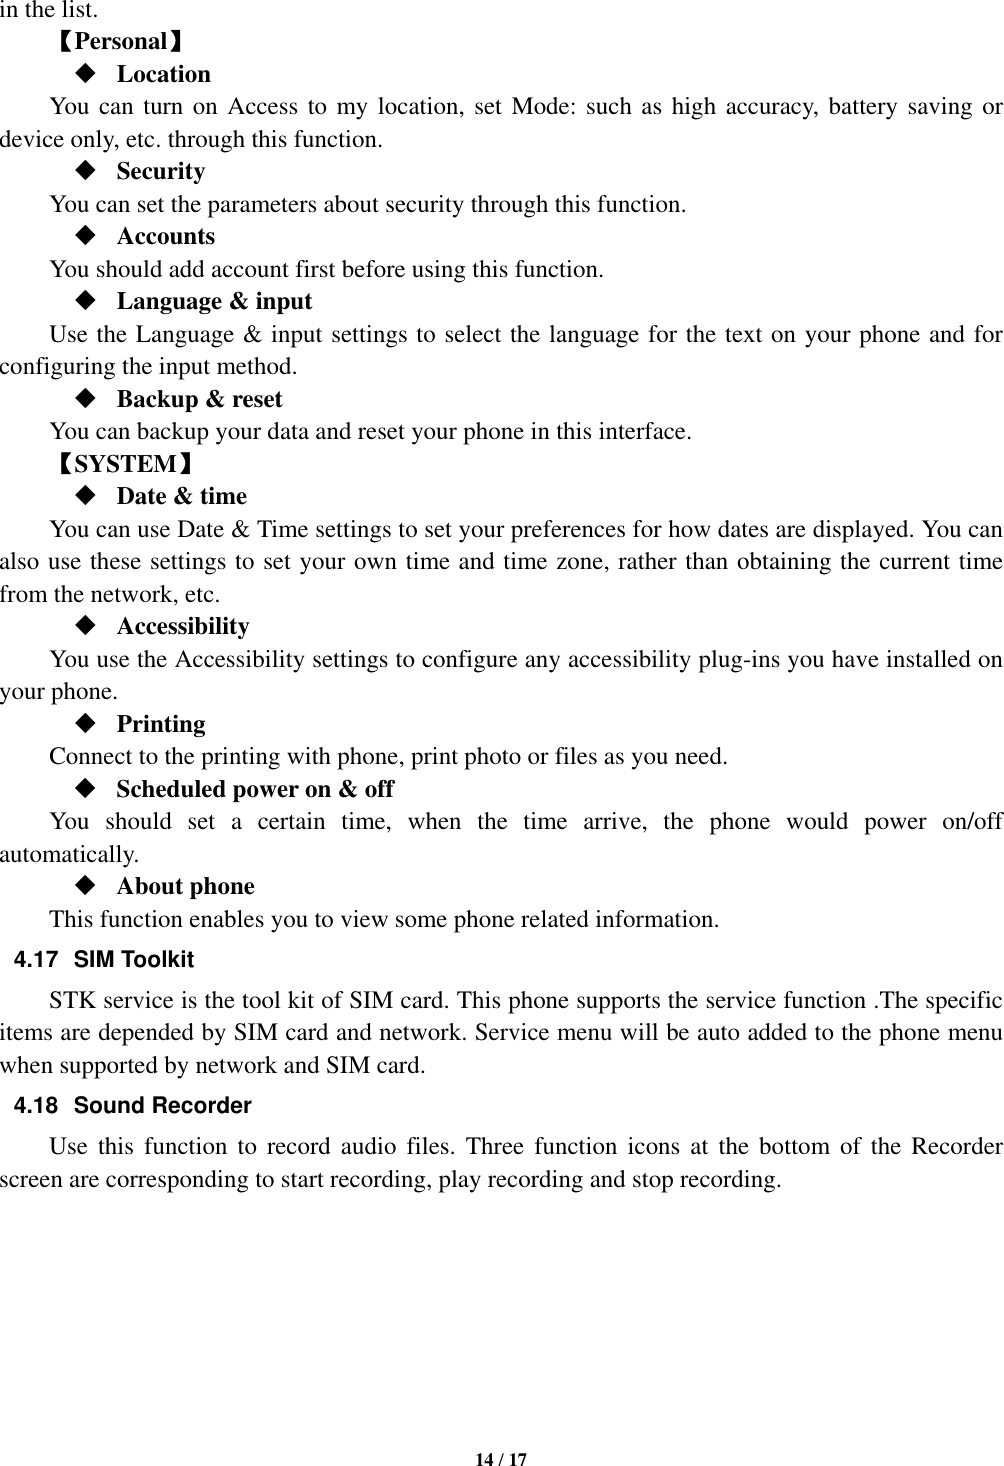 Page 14 of Sky Phone SKYELITEA55 4G Smart Phone User Manual